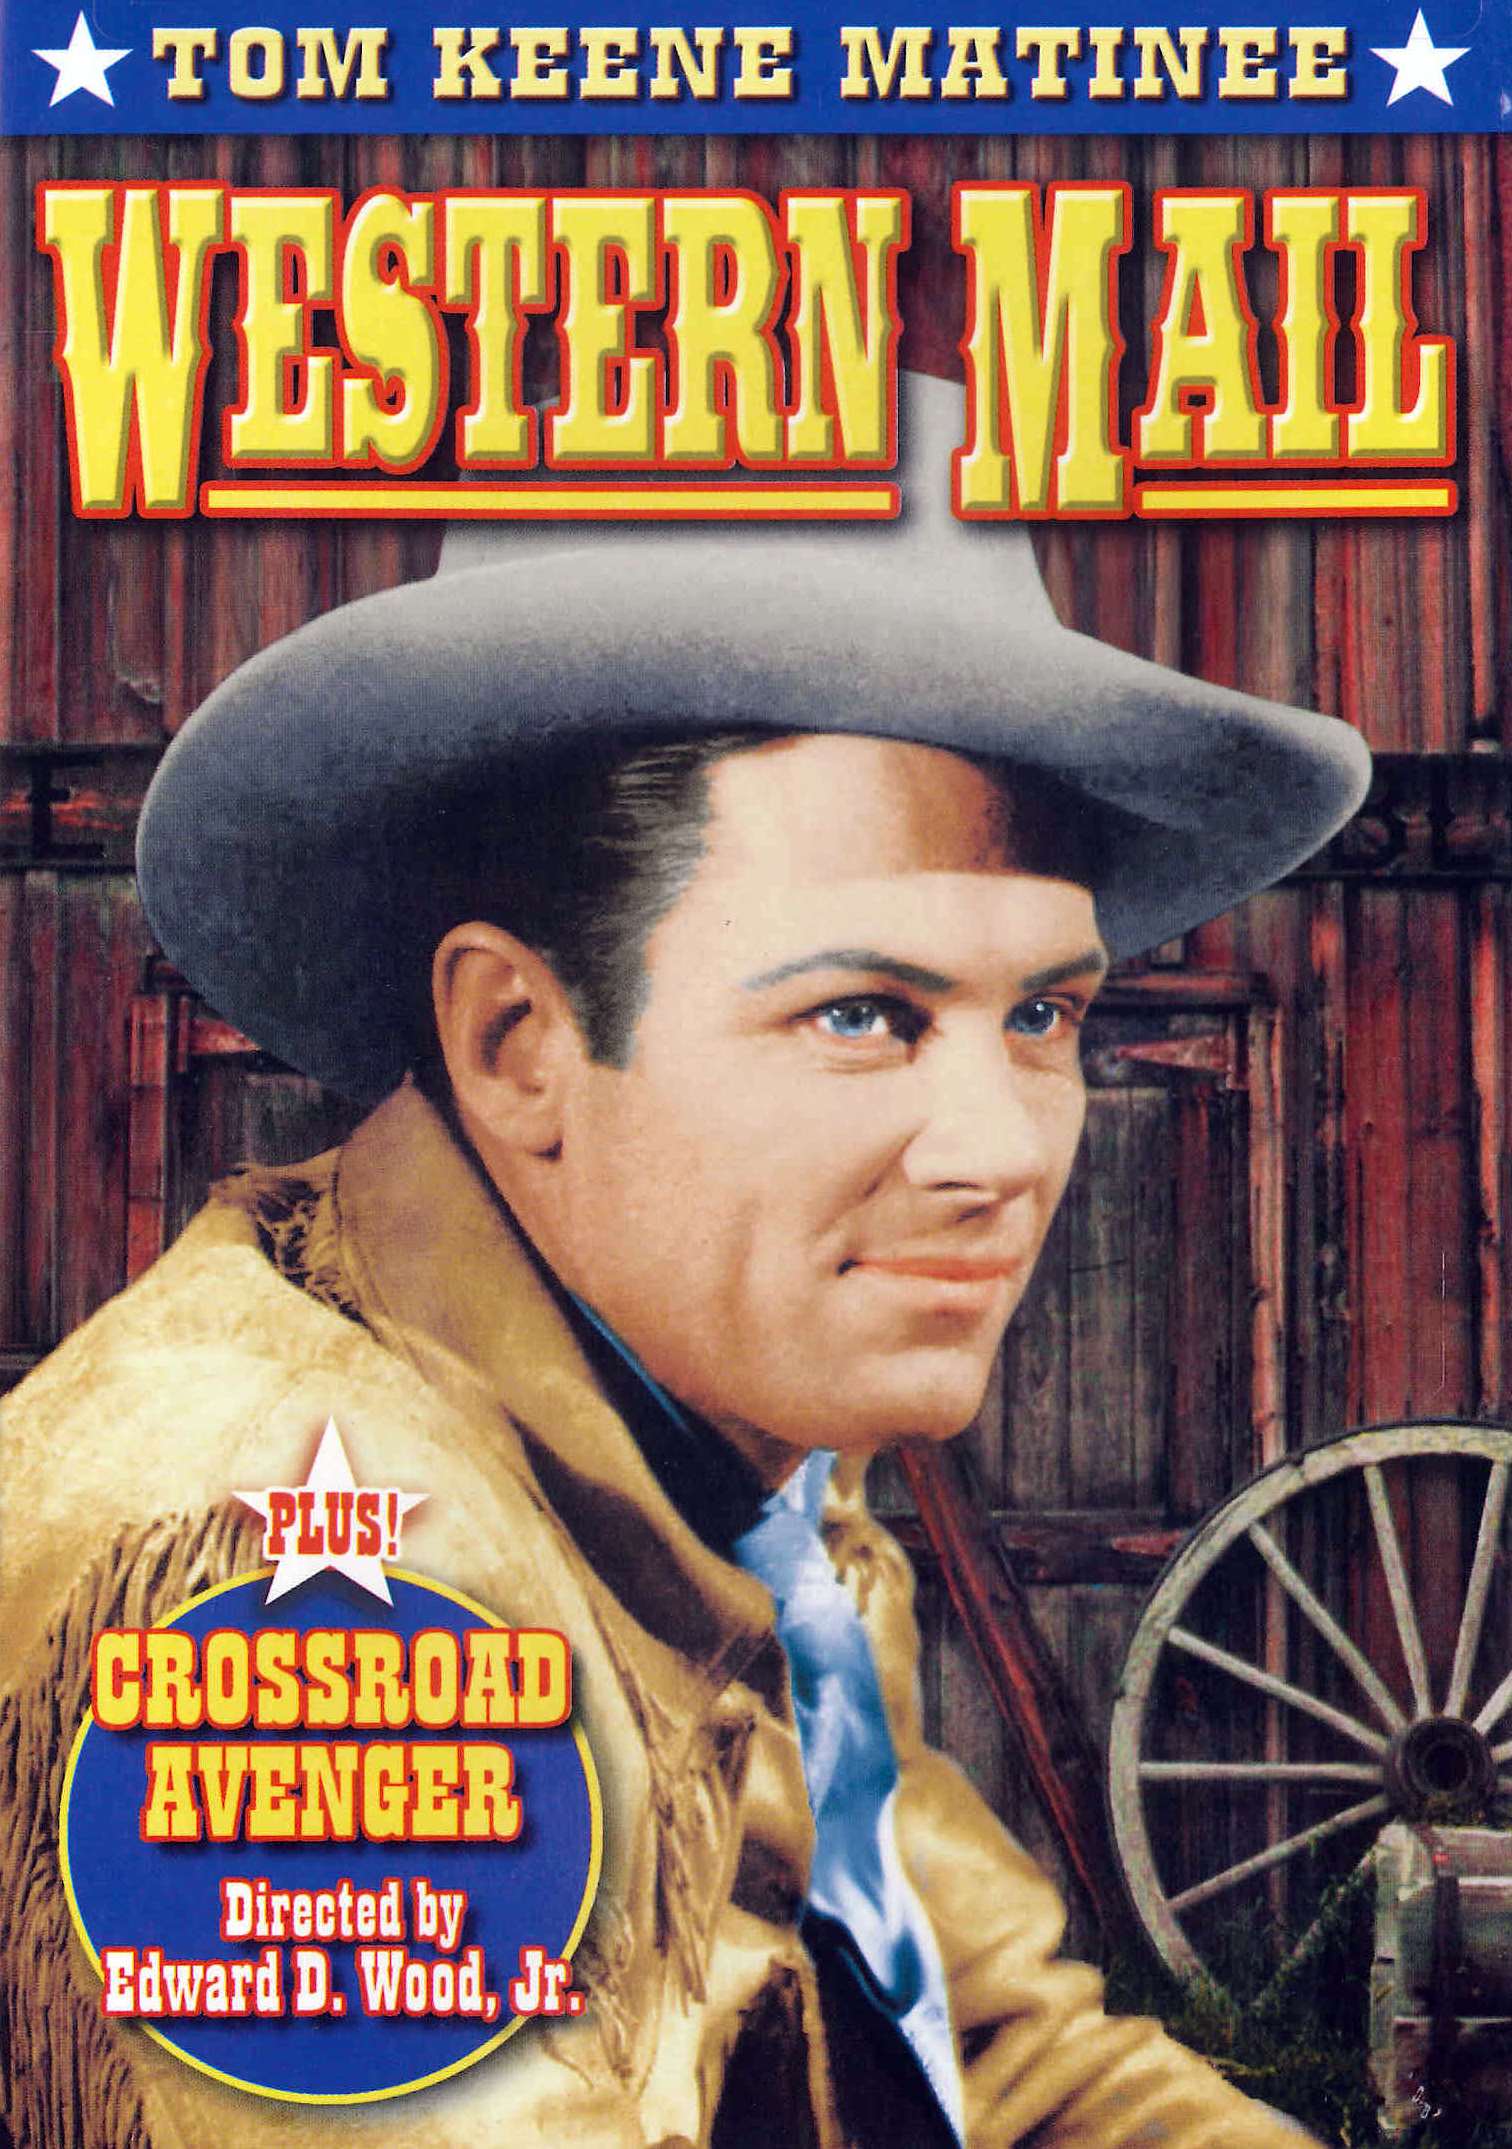 Western Mail/Crossroad Avenger cover art